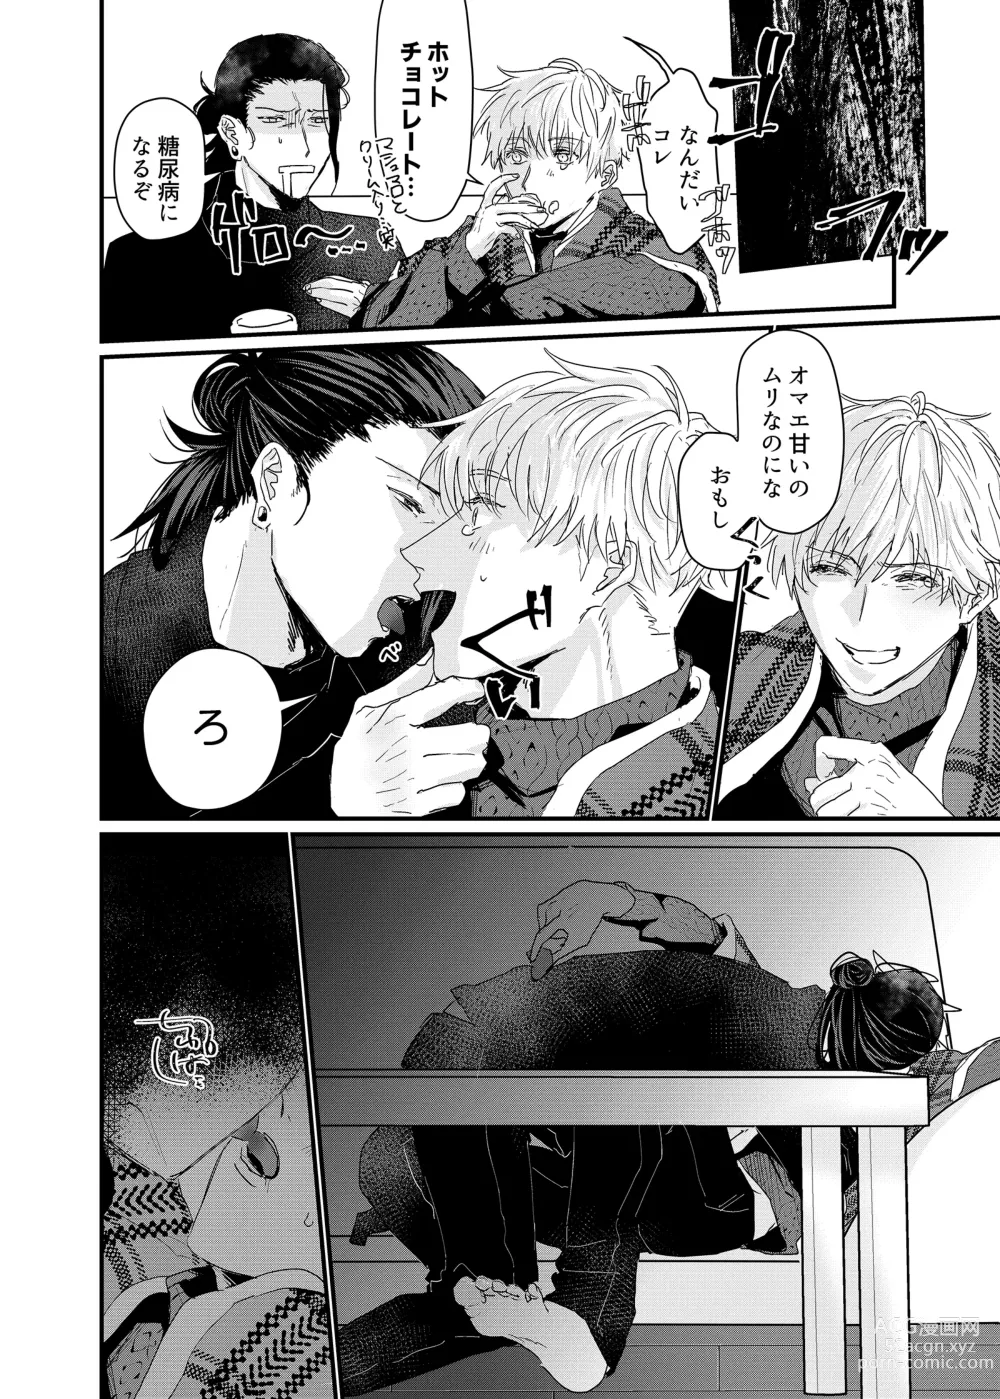 Page 7 of doujinshi Manjushage no Yume no Naka